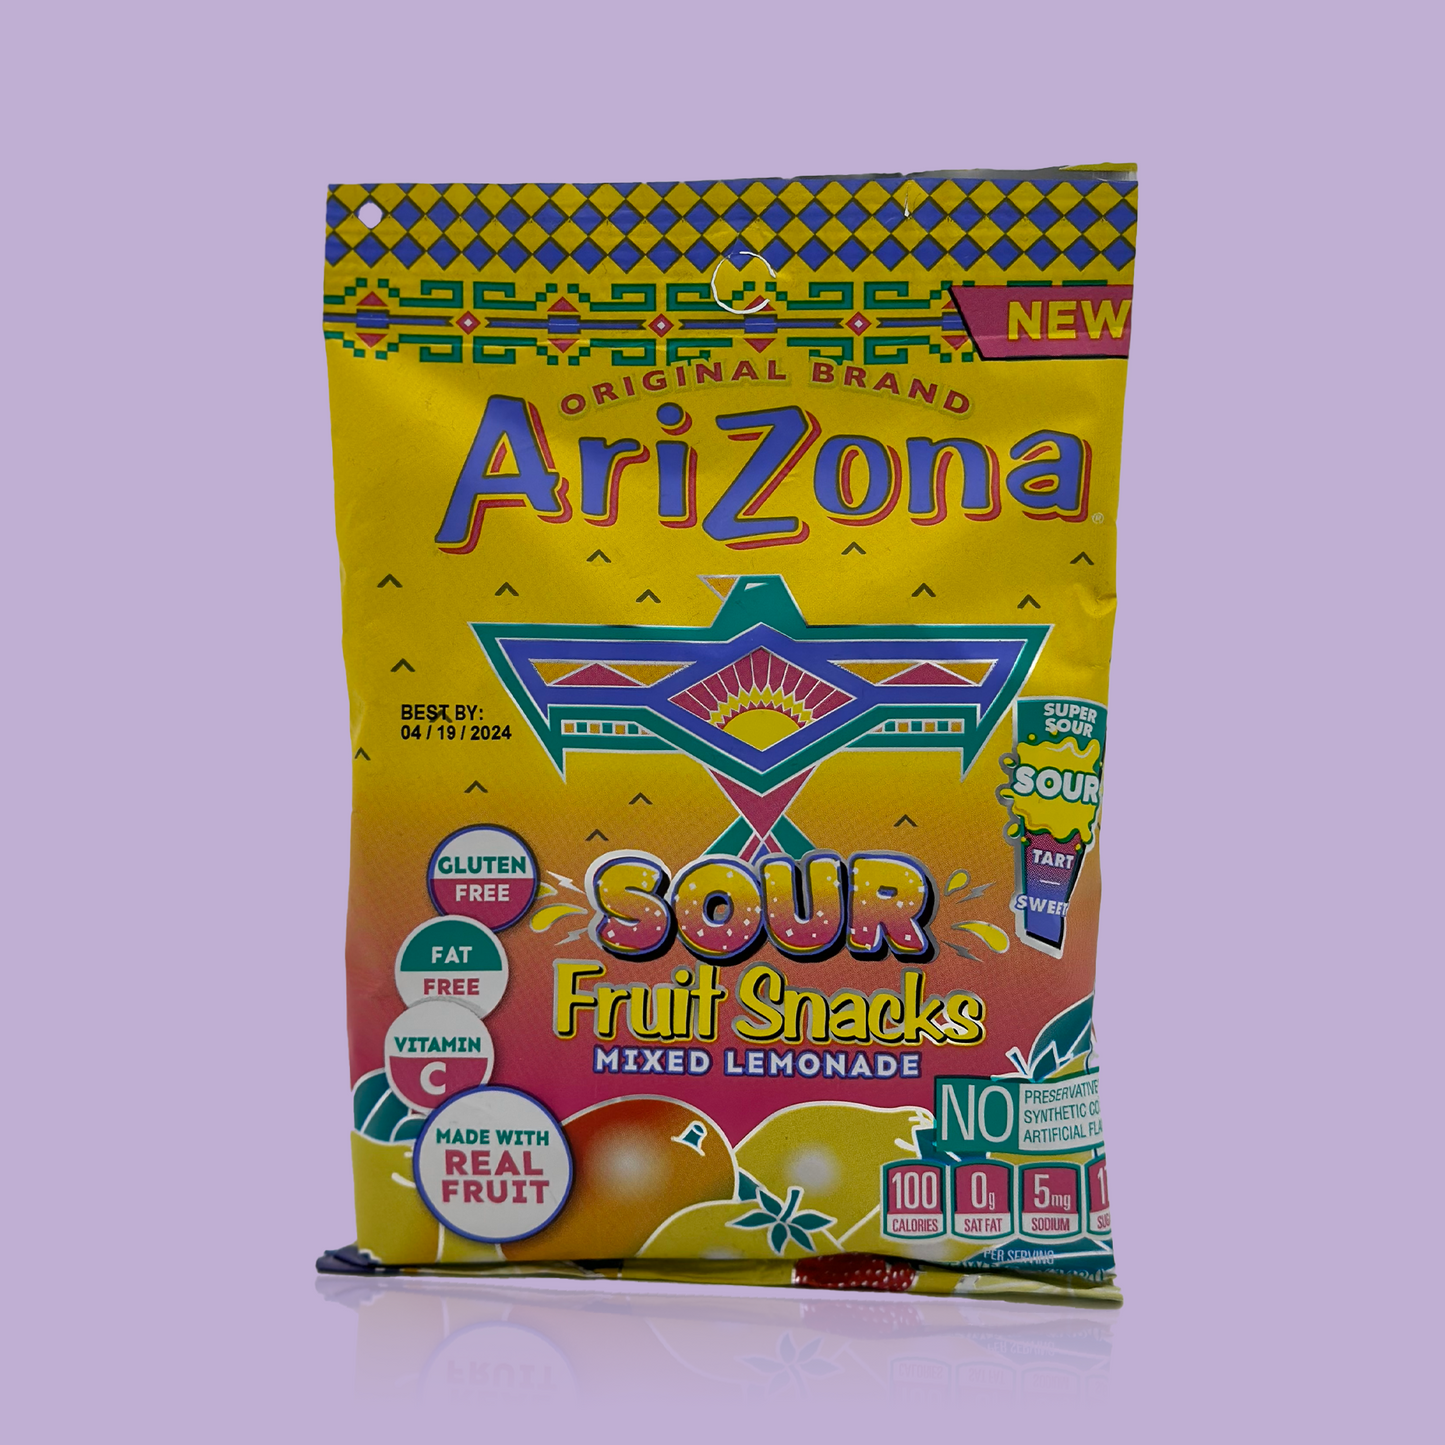 AriZona Sour Mixed Lemonade Fruit Snacks (142g).